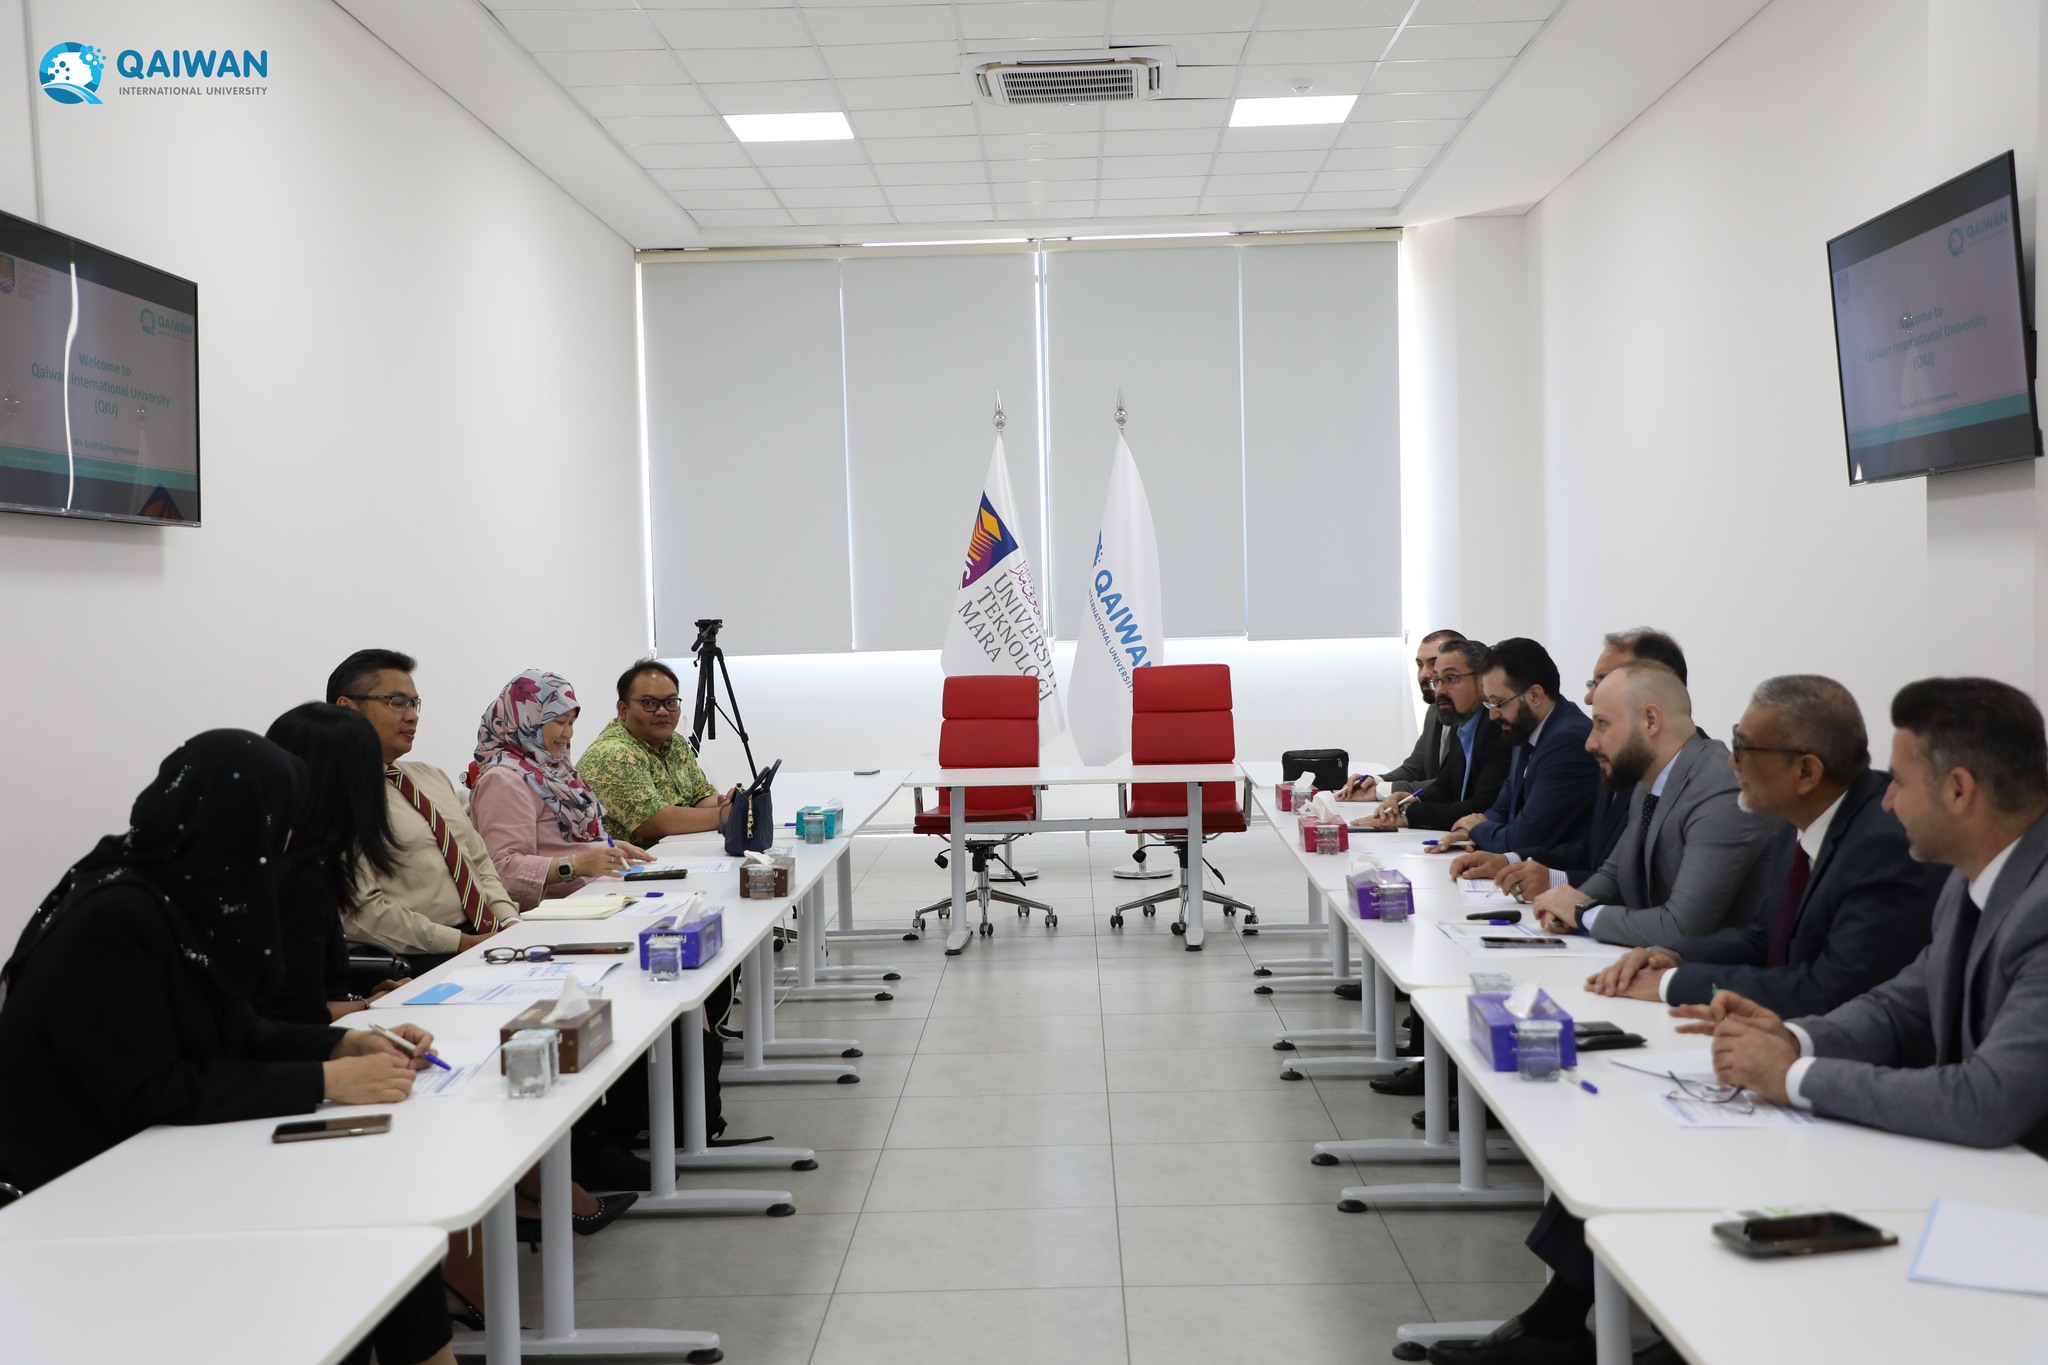 The Presidency of QIU welcomed a distinguished delegation from Universiti Teknologi MARA (UiTM)